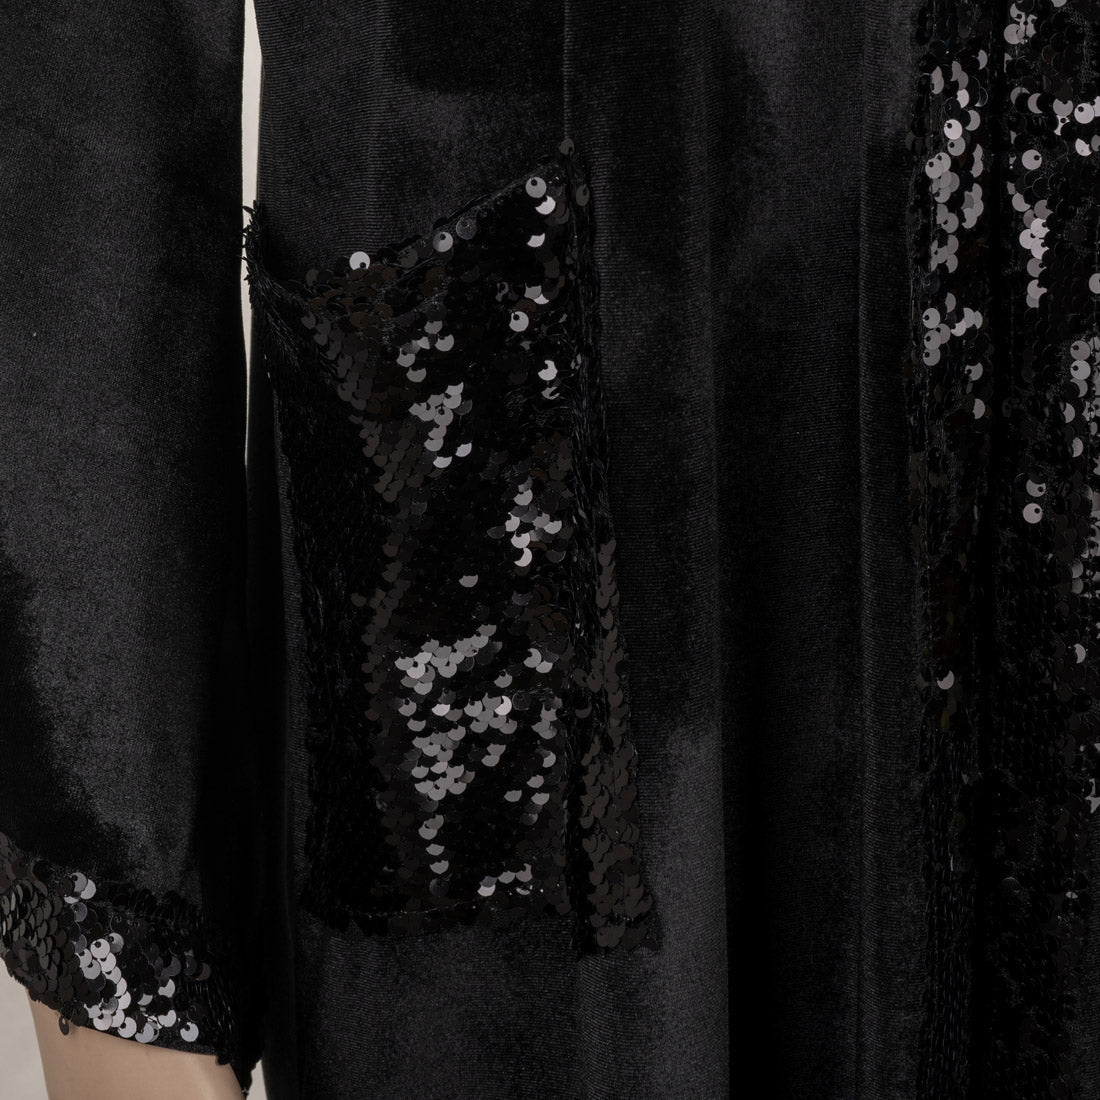 Ola Azzam Brand New Black Sequin Kaftan with Pockets - mymadstore.com